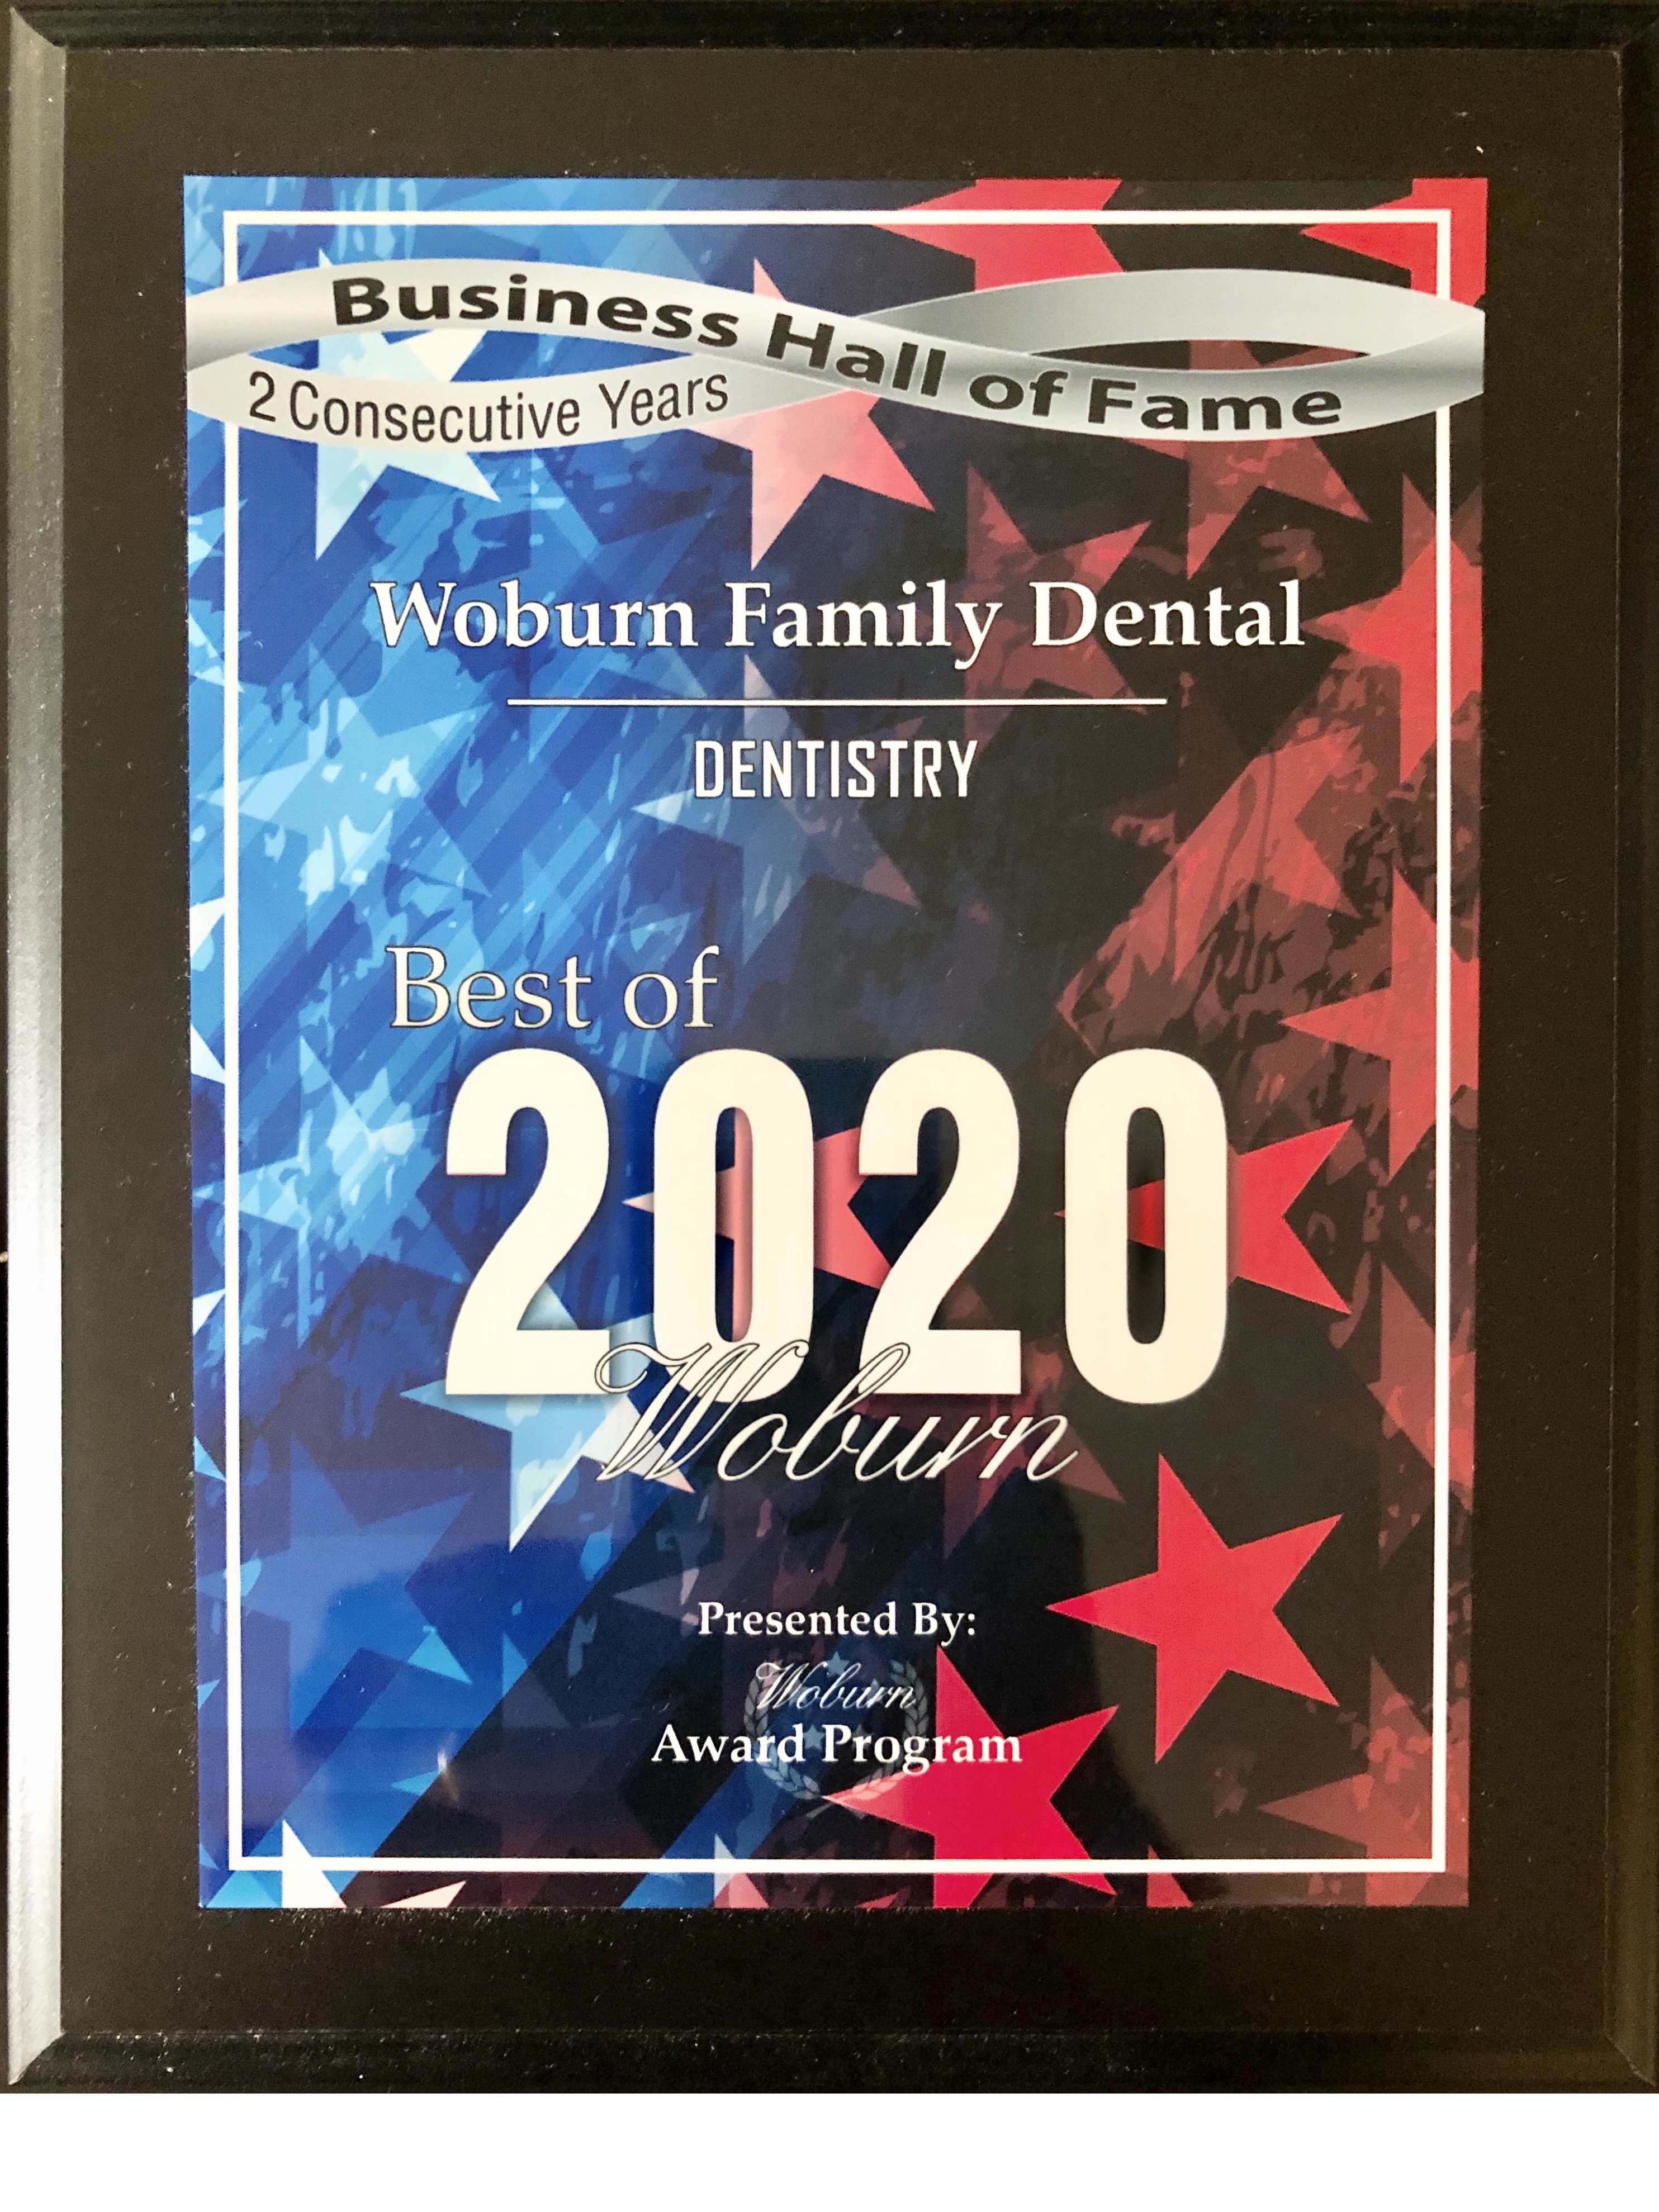 Best Woburn Dentist award